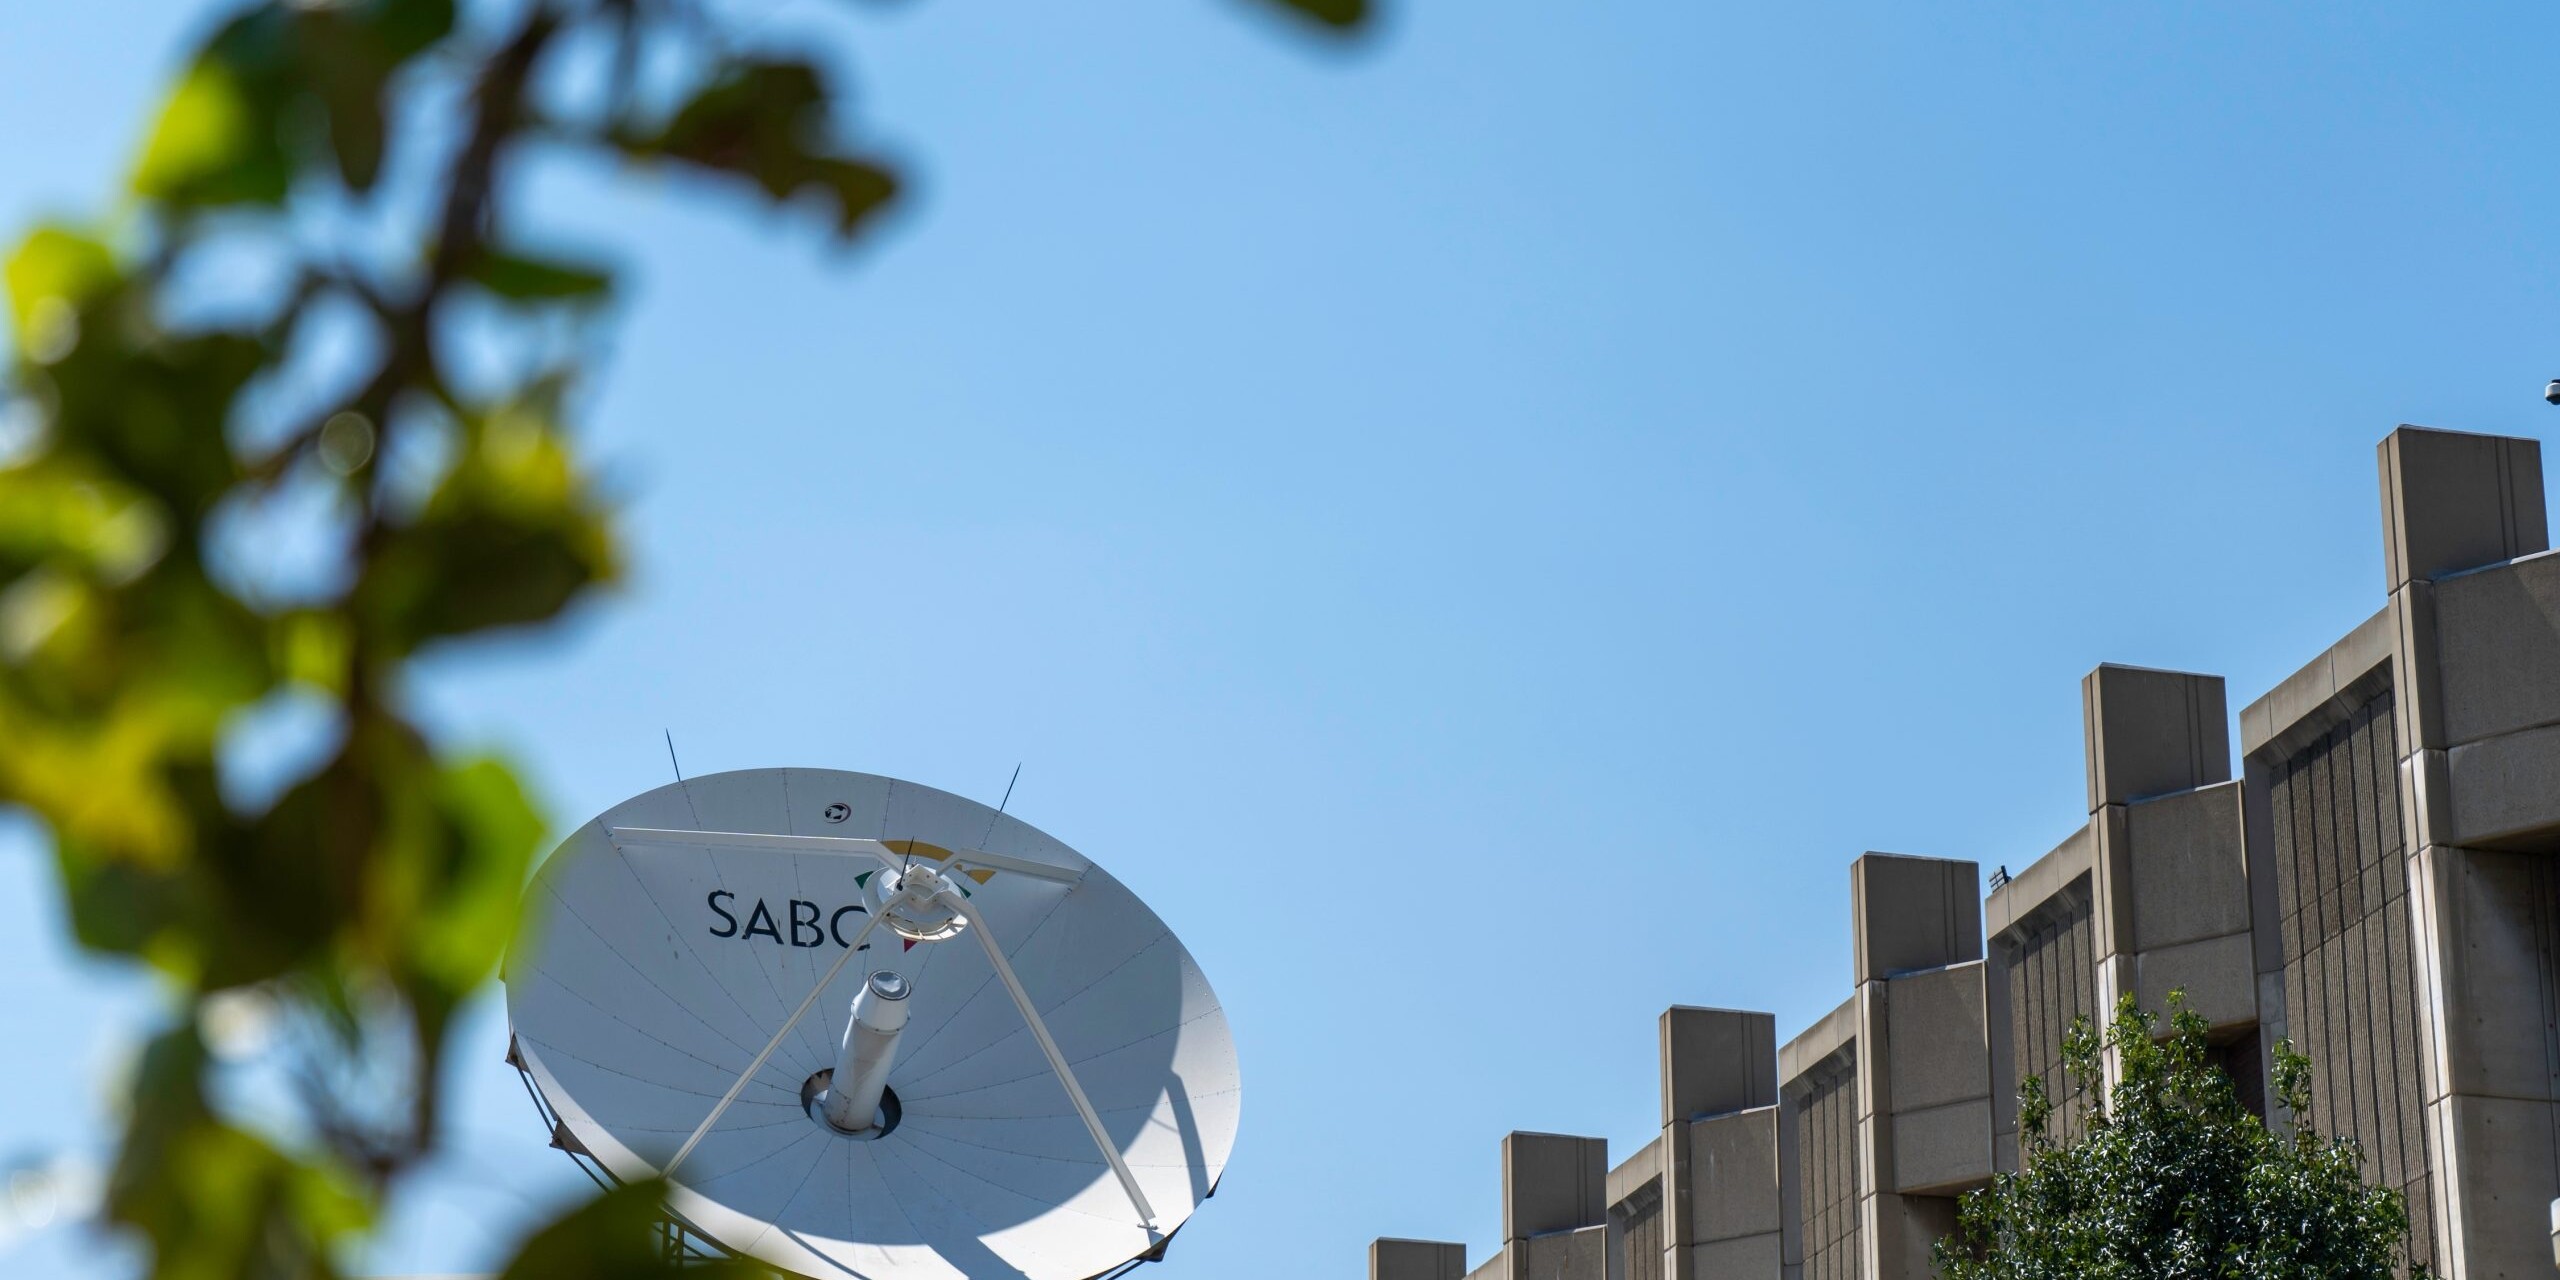 SABC-branded satellite against a blue sky.